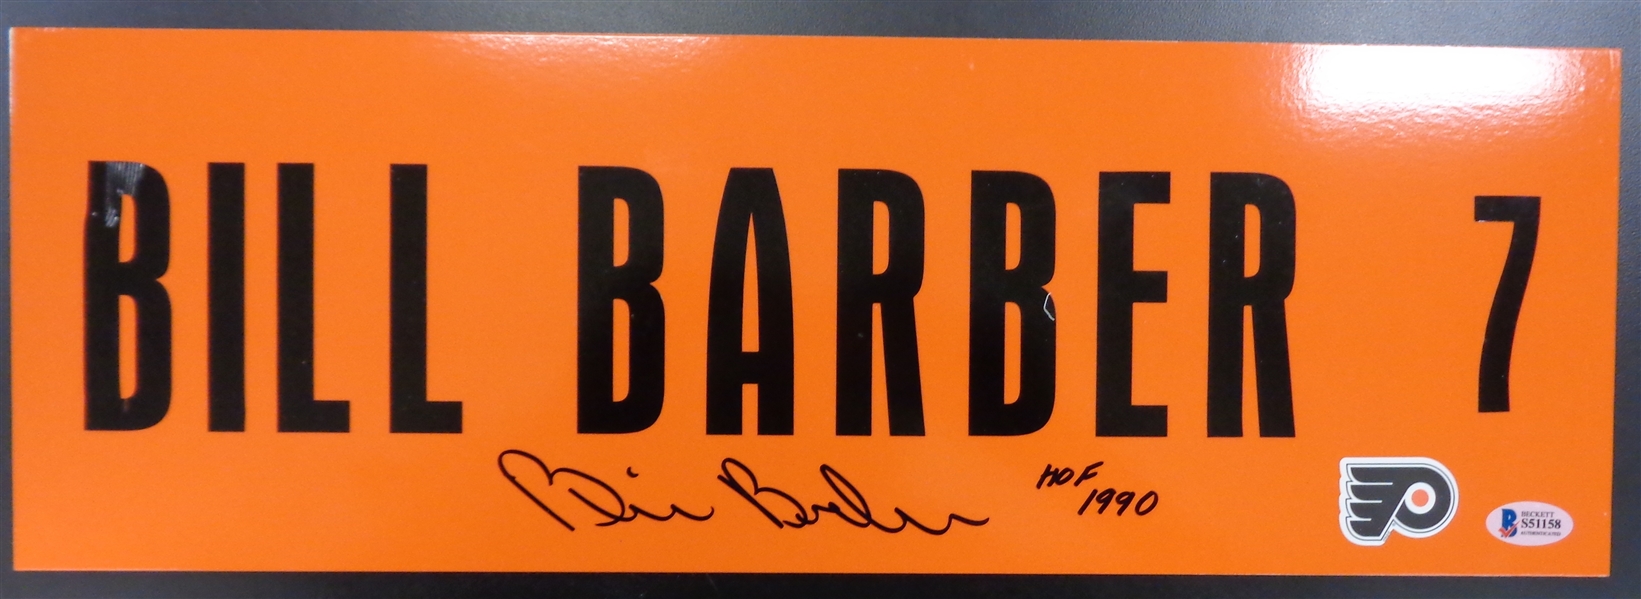 Bill Barber Autographed Custom 18x6 Metal Sign